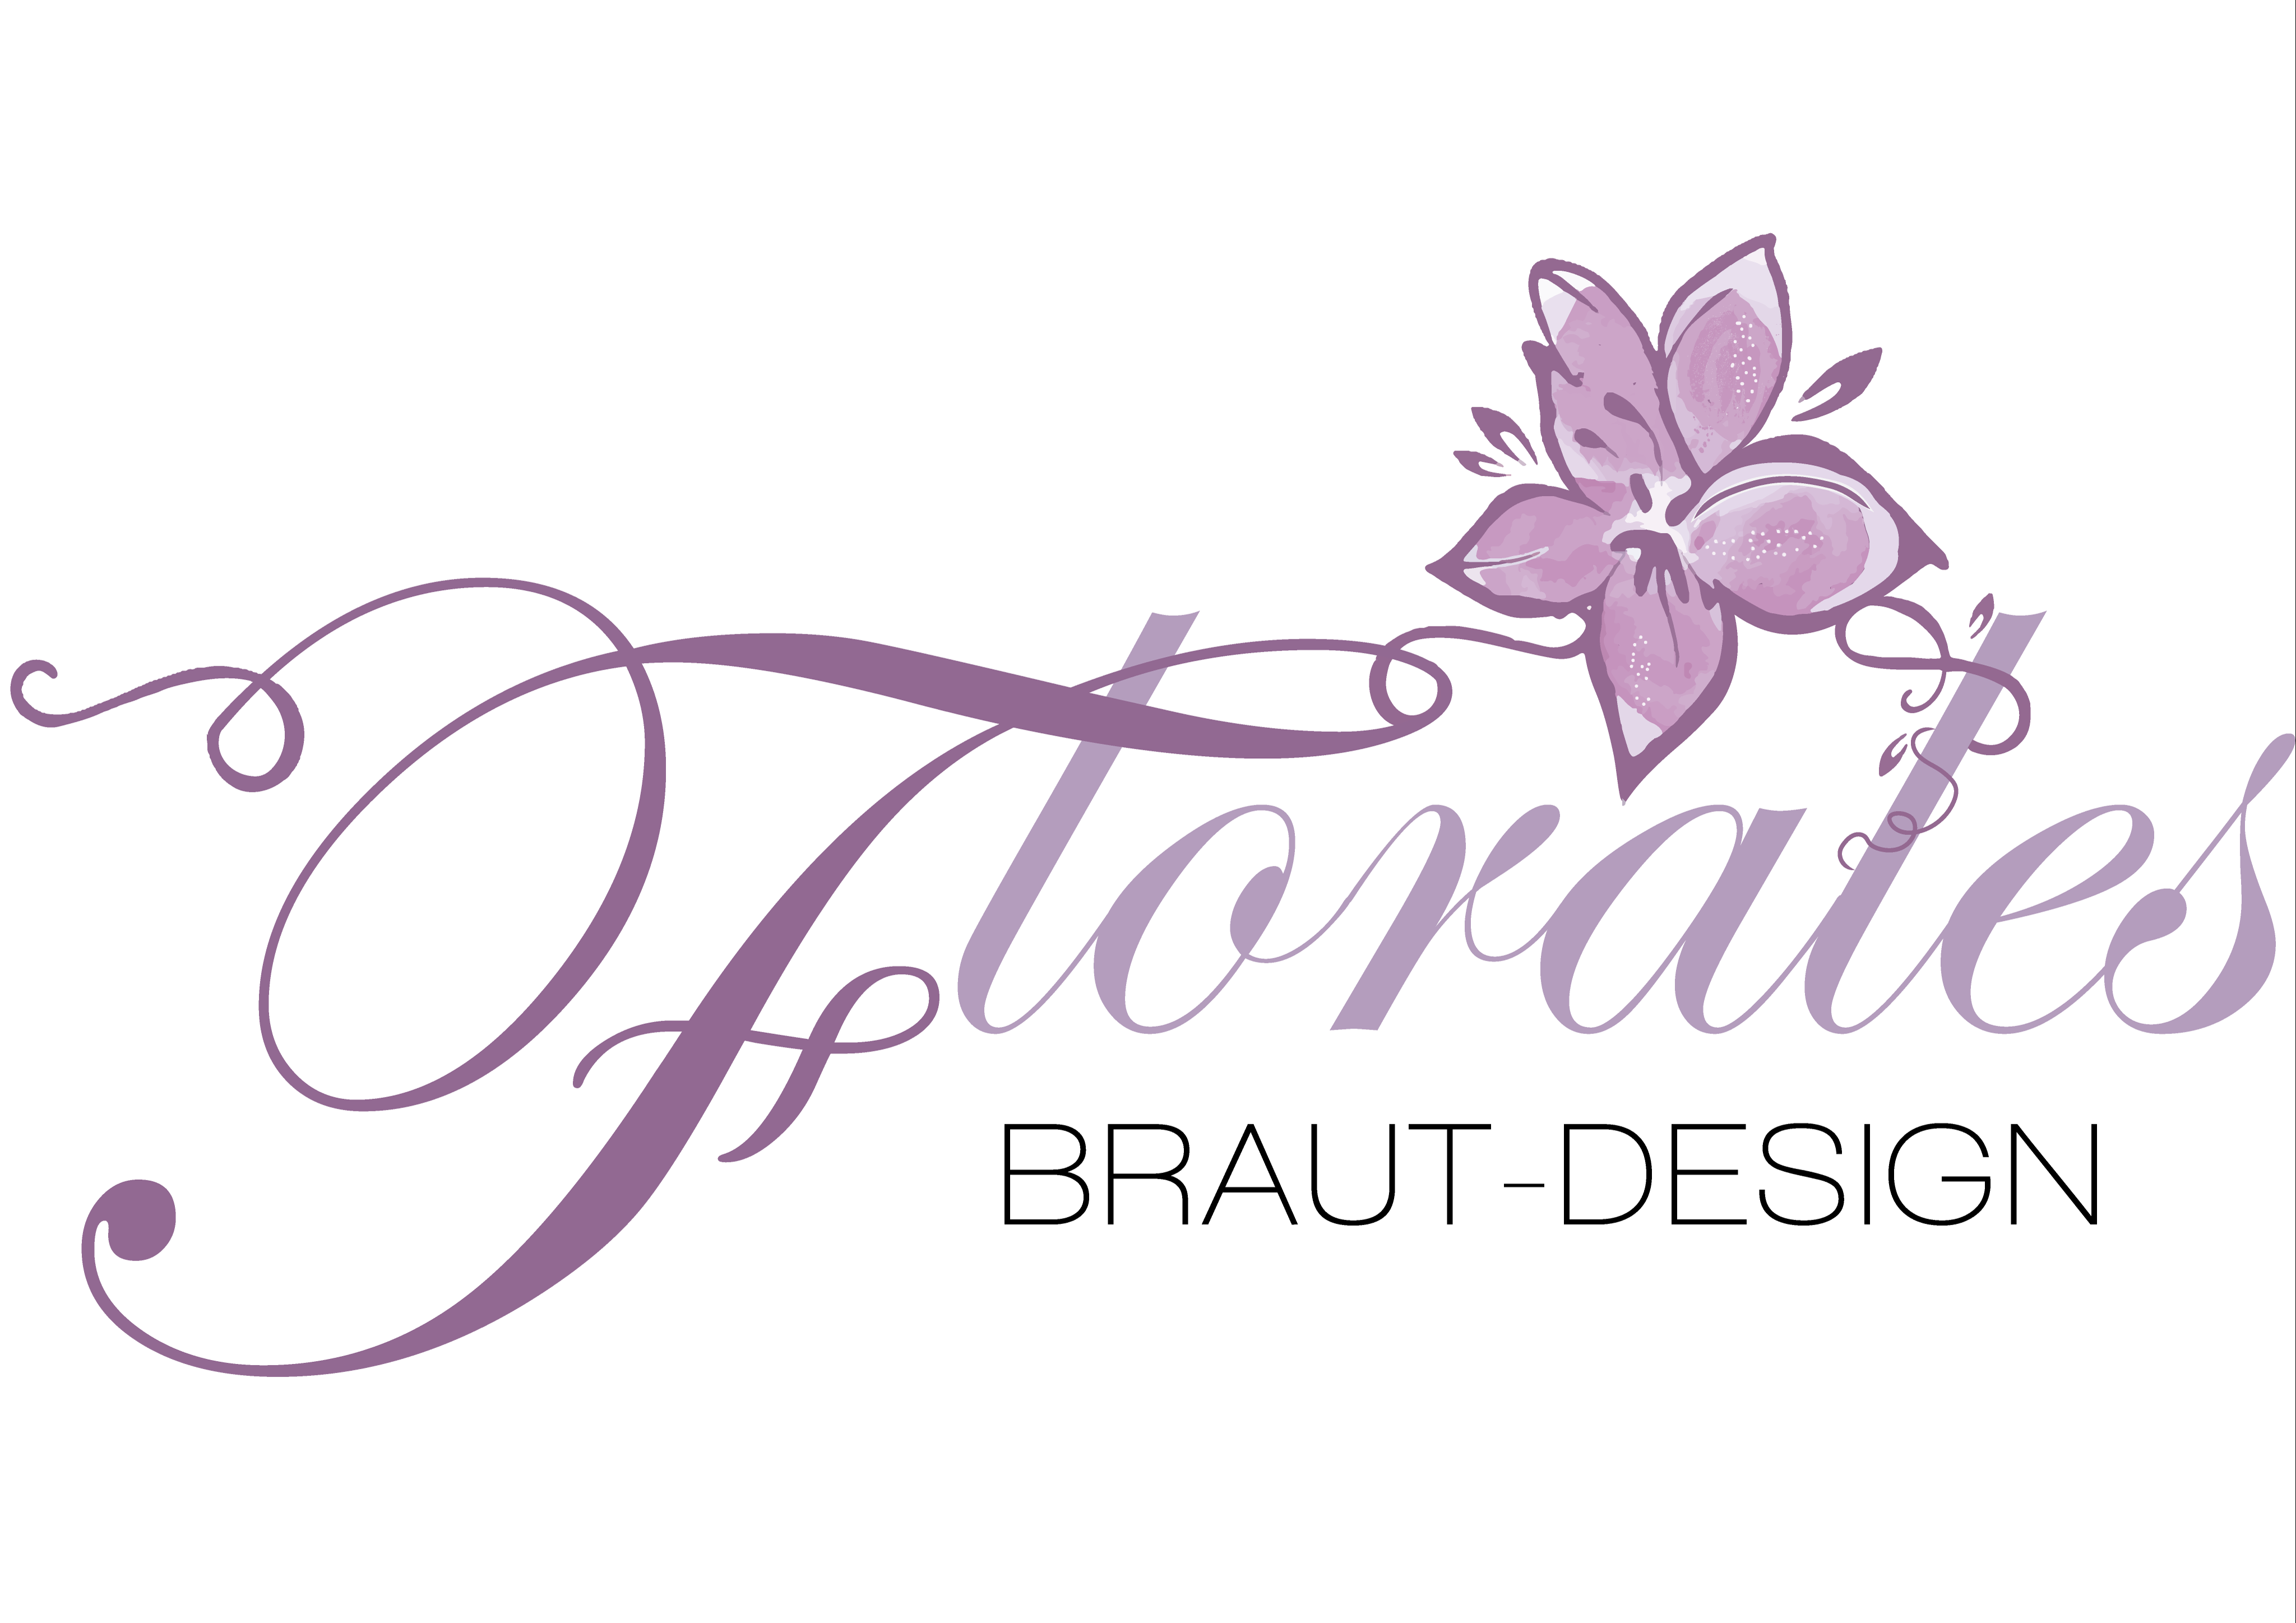 Florales Braut-Design